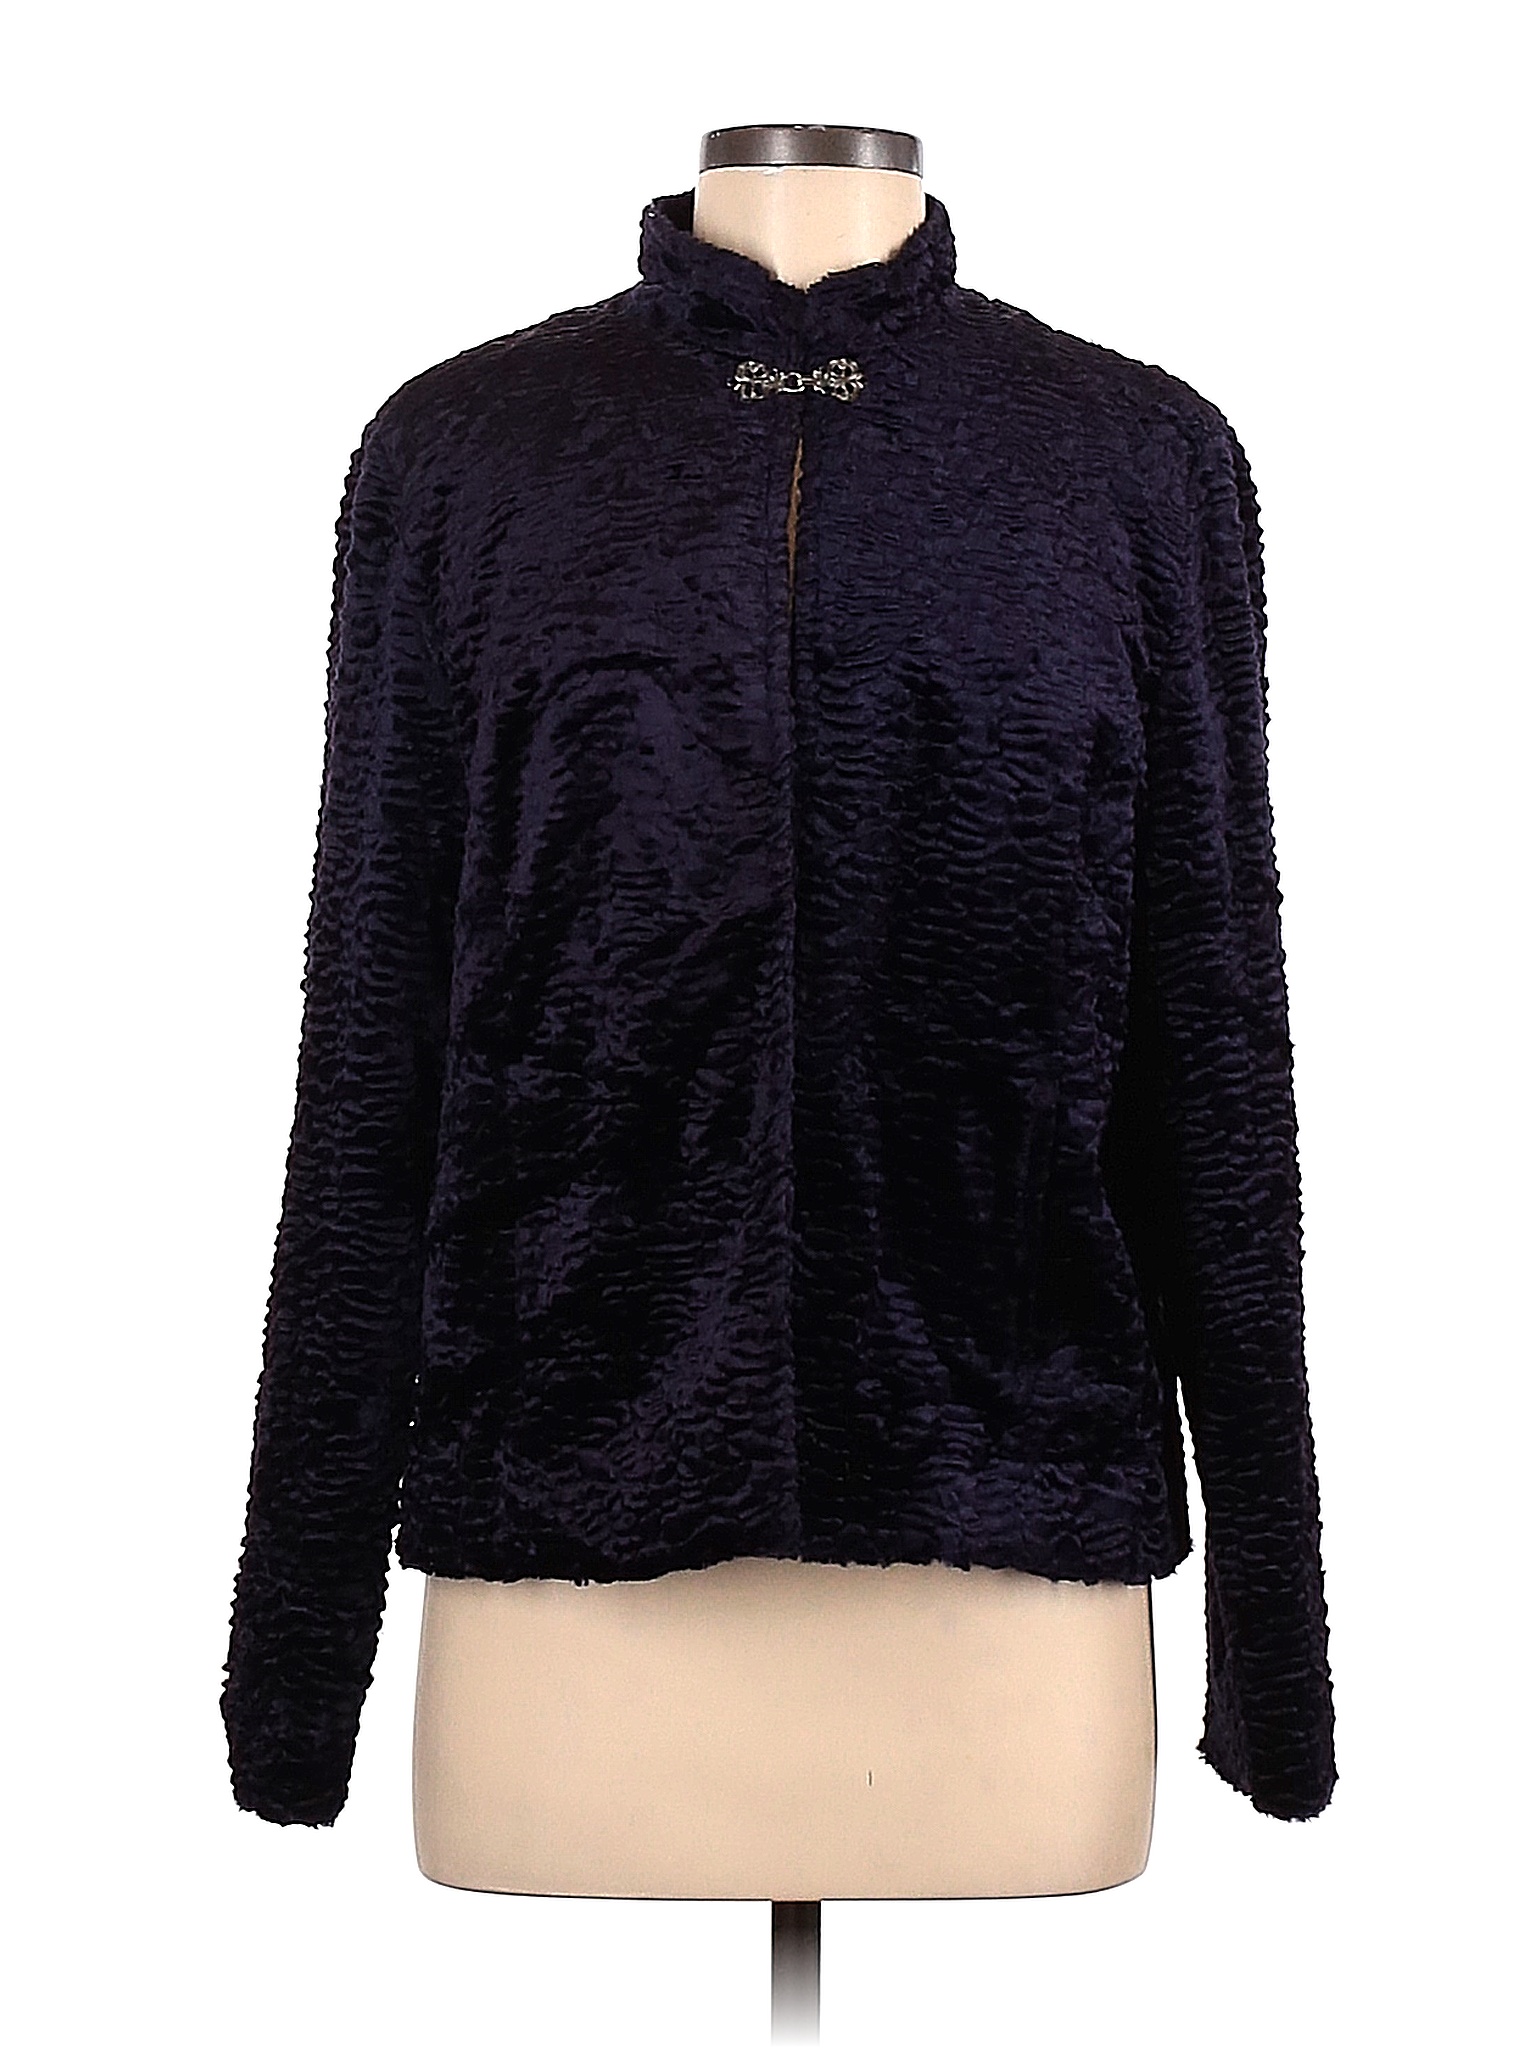 Koret Solid Colored Purple Jacket Size M - 83% off | thredUP